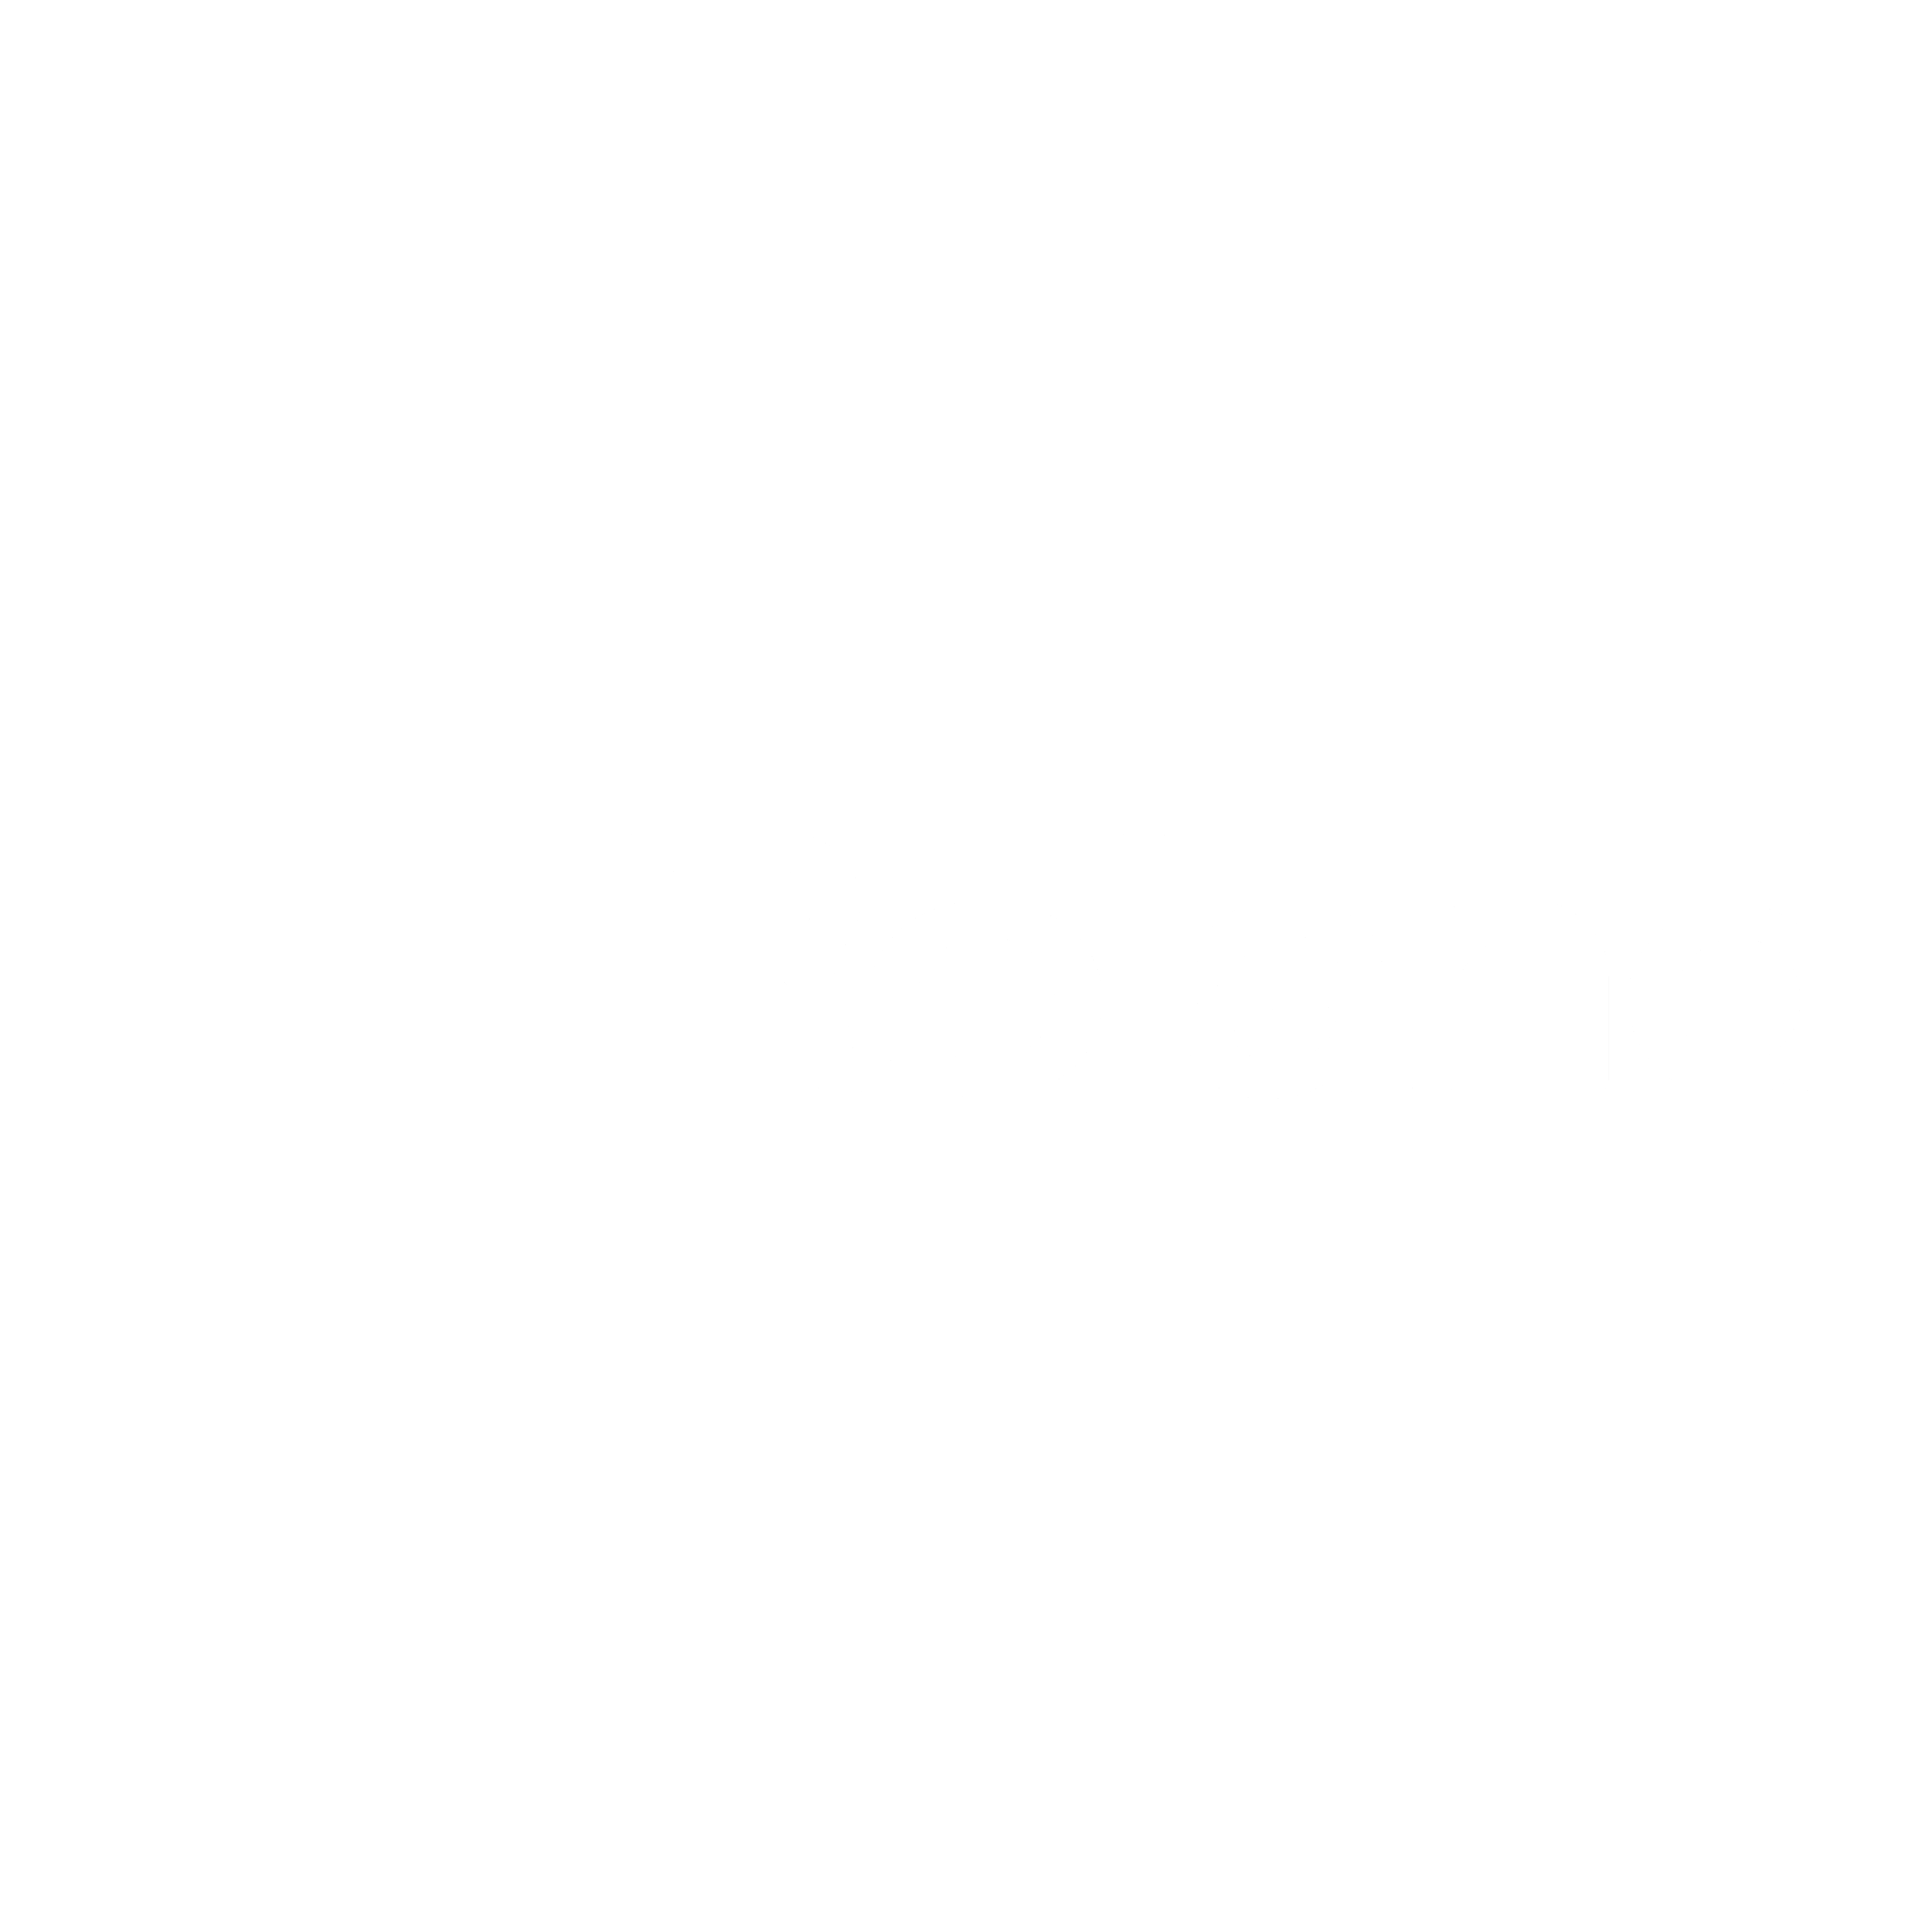 roland-logo-black-and-white (1)